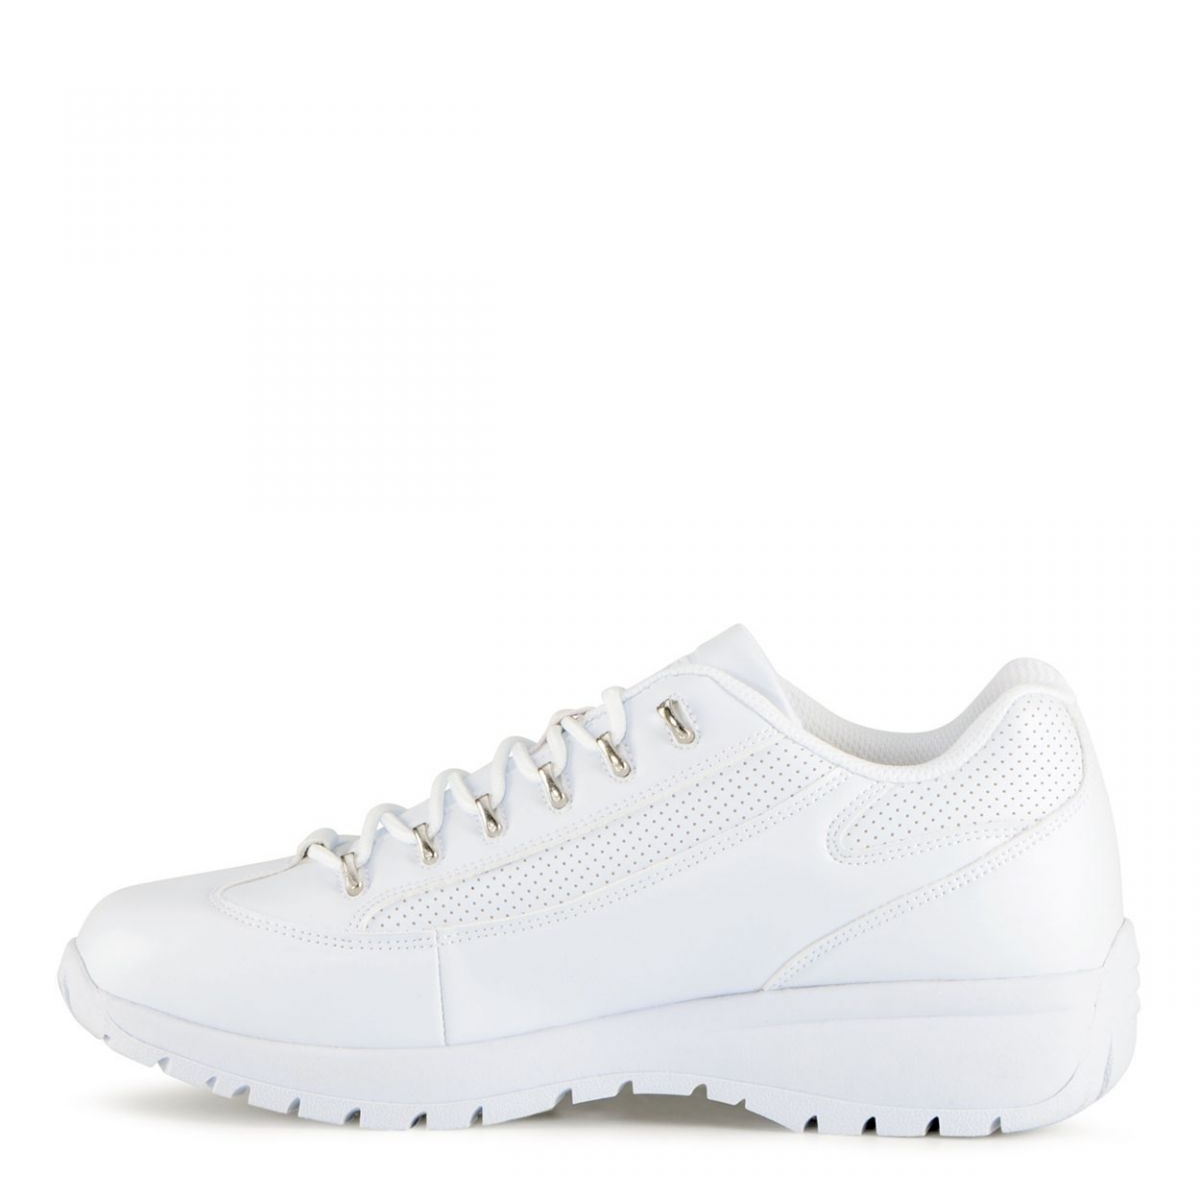 Lugz Men's Express Sneaker White - MEXPRSPV-100 WHITE - WHITE, 9